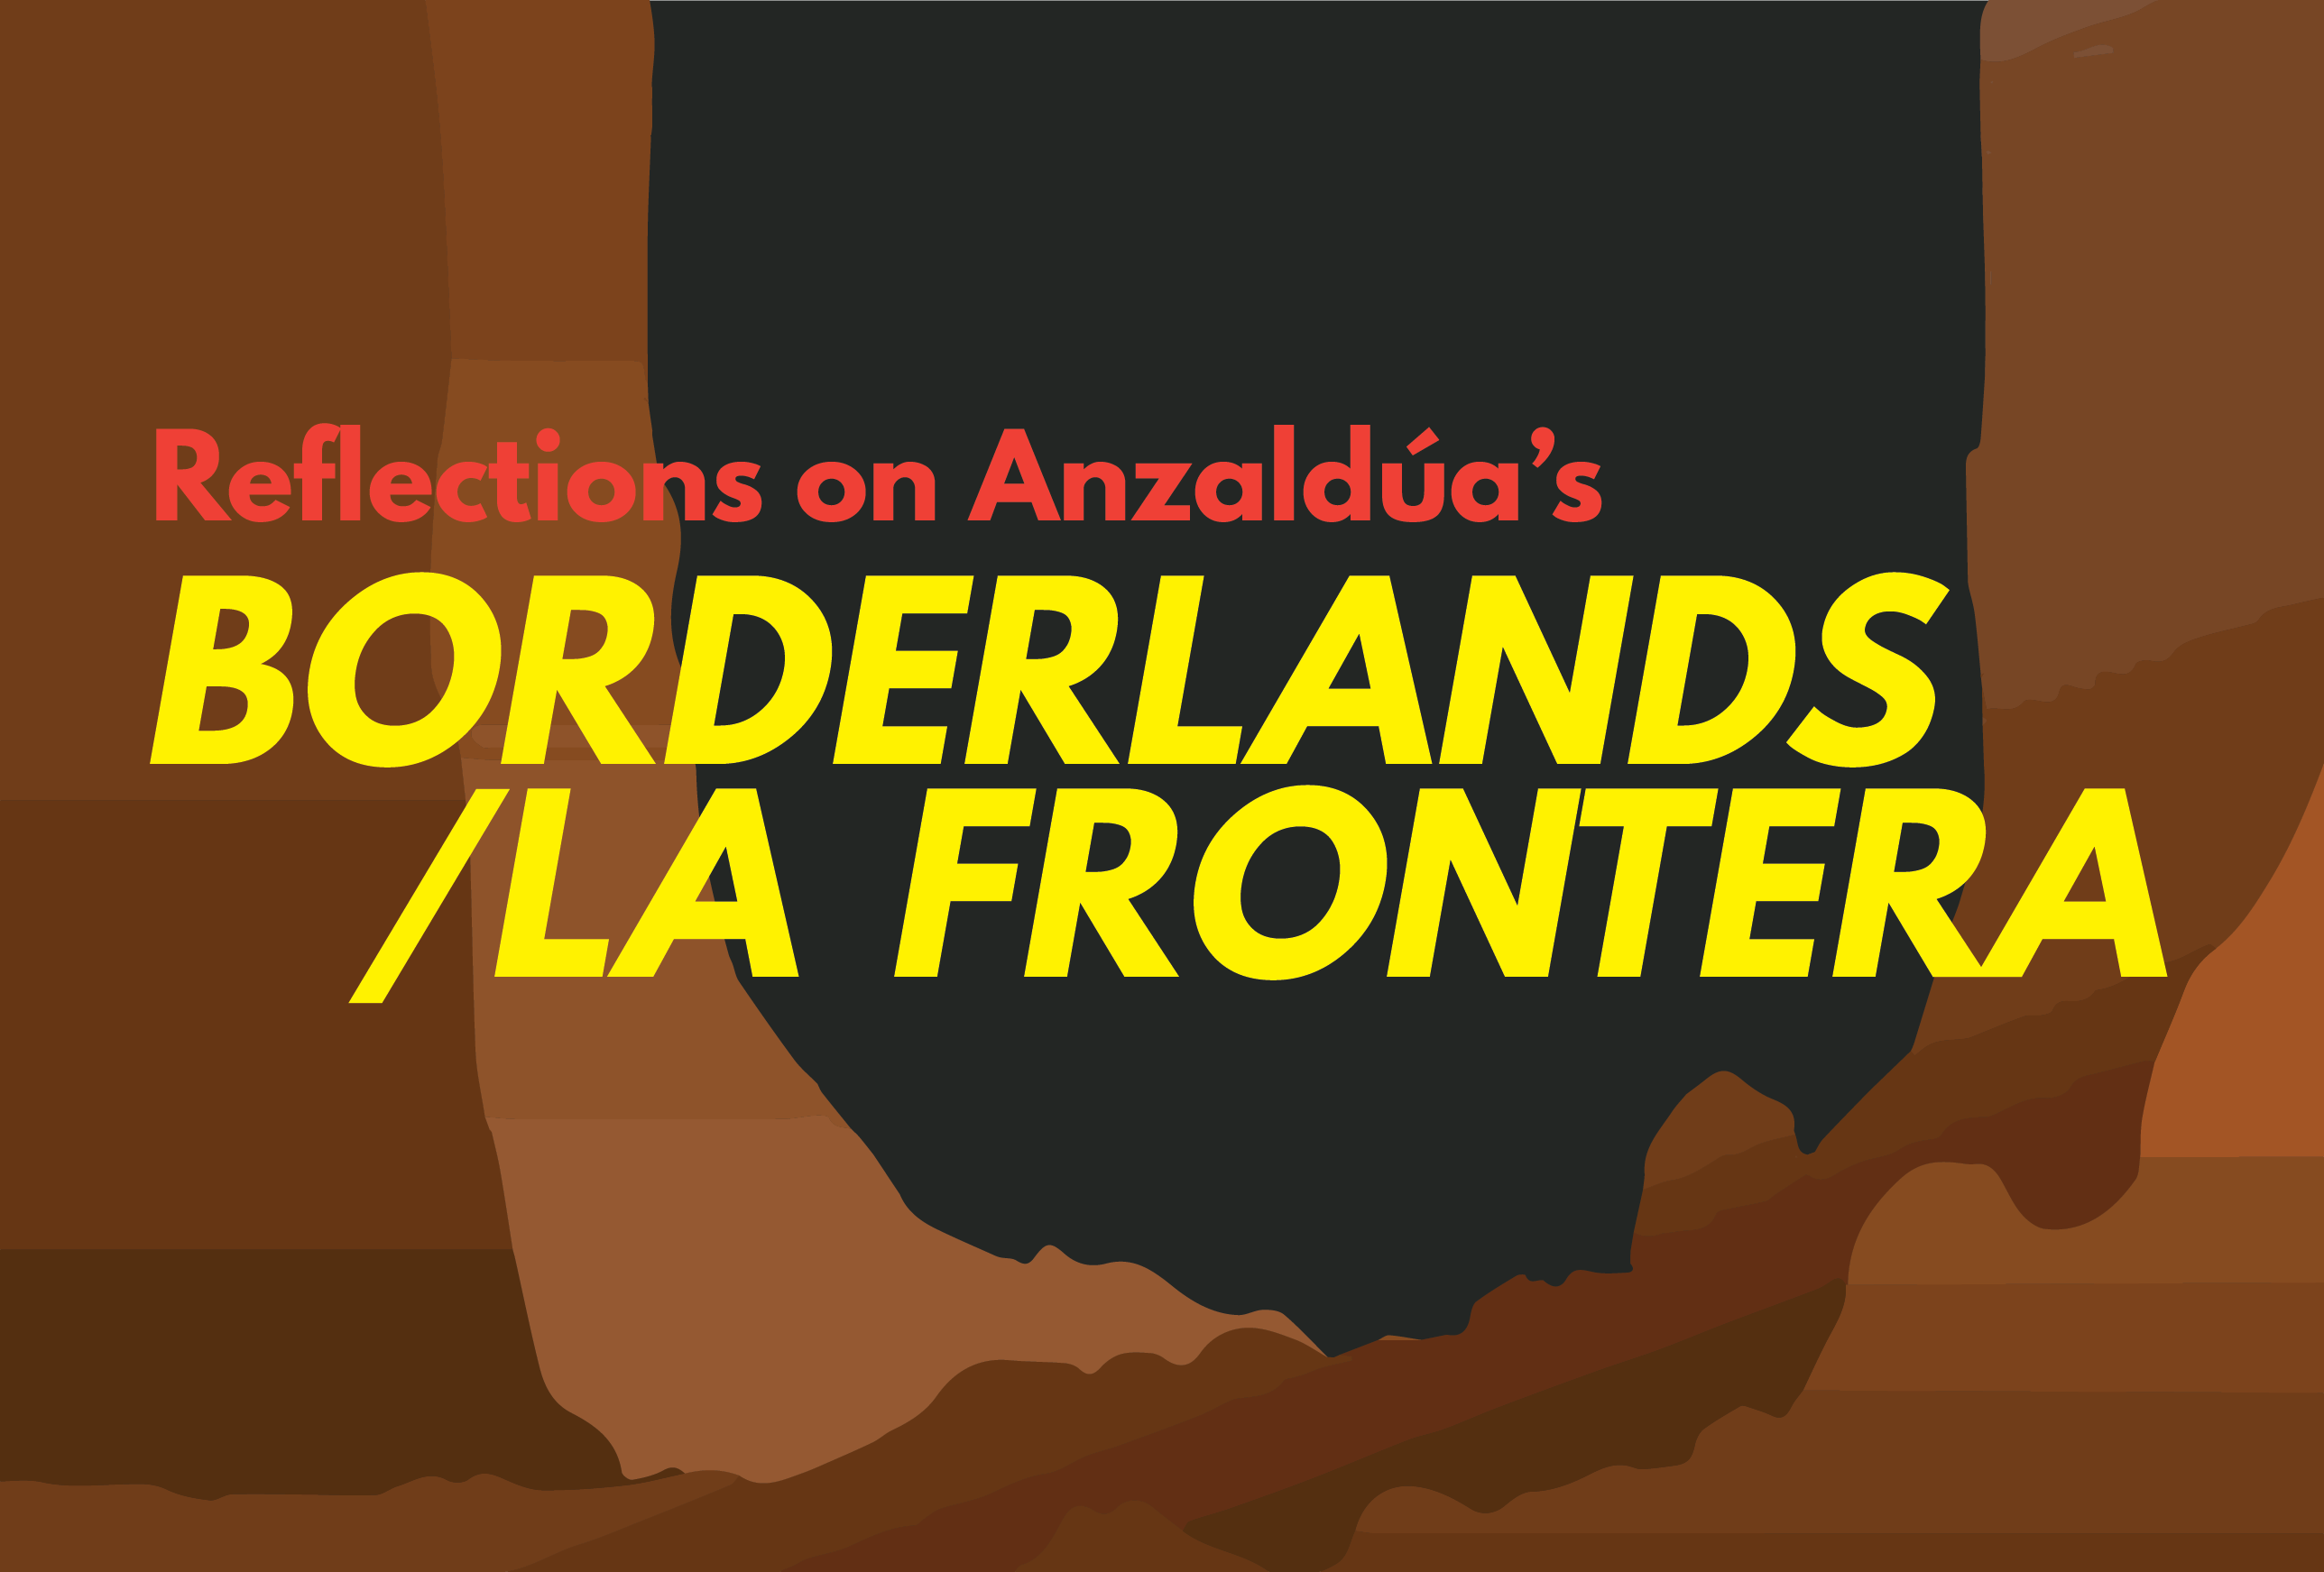 Reflections on Borderlands